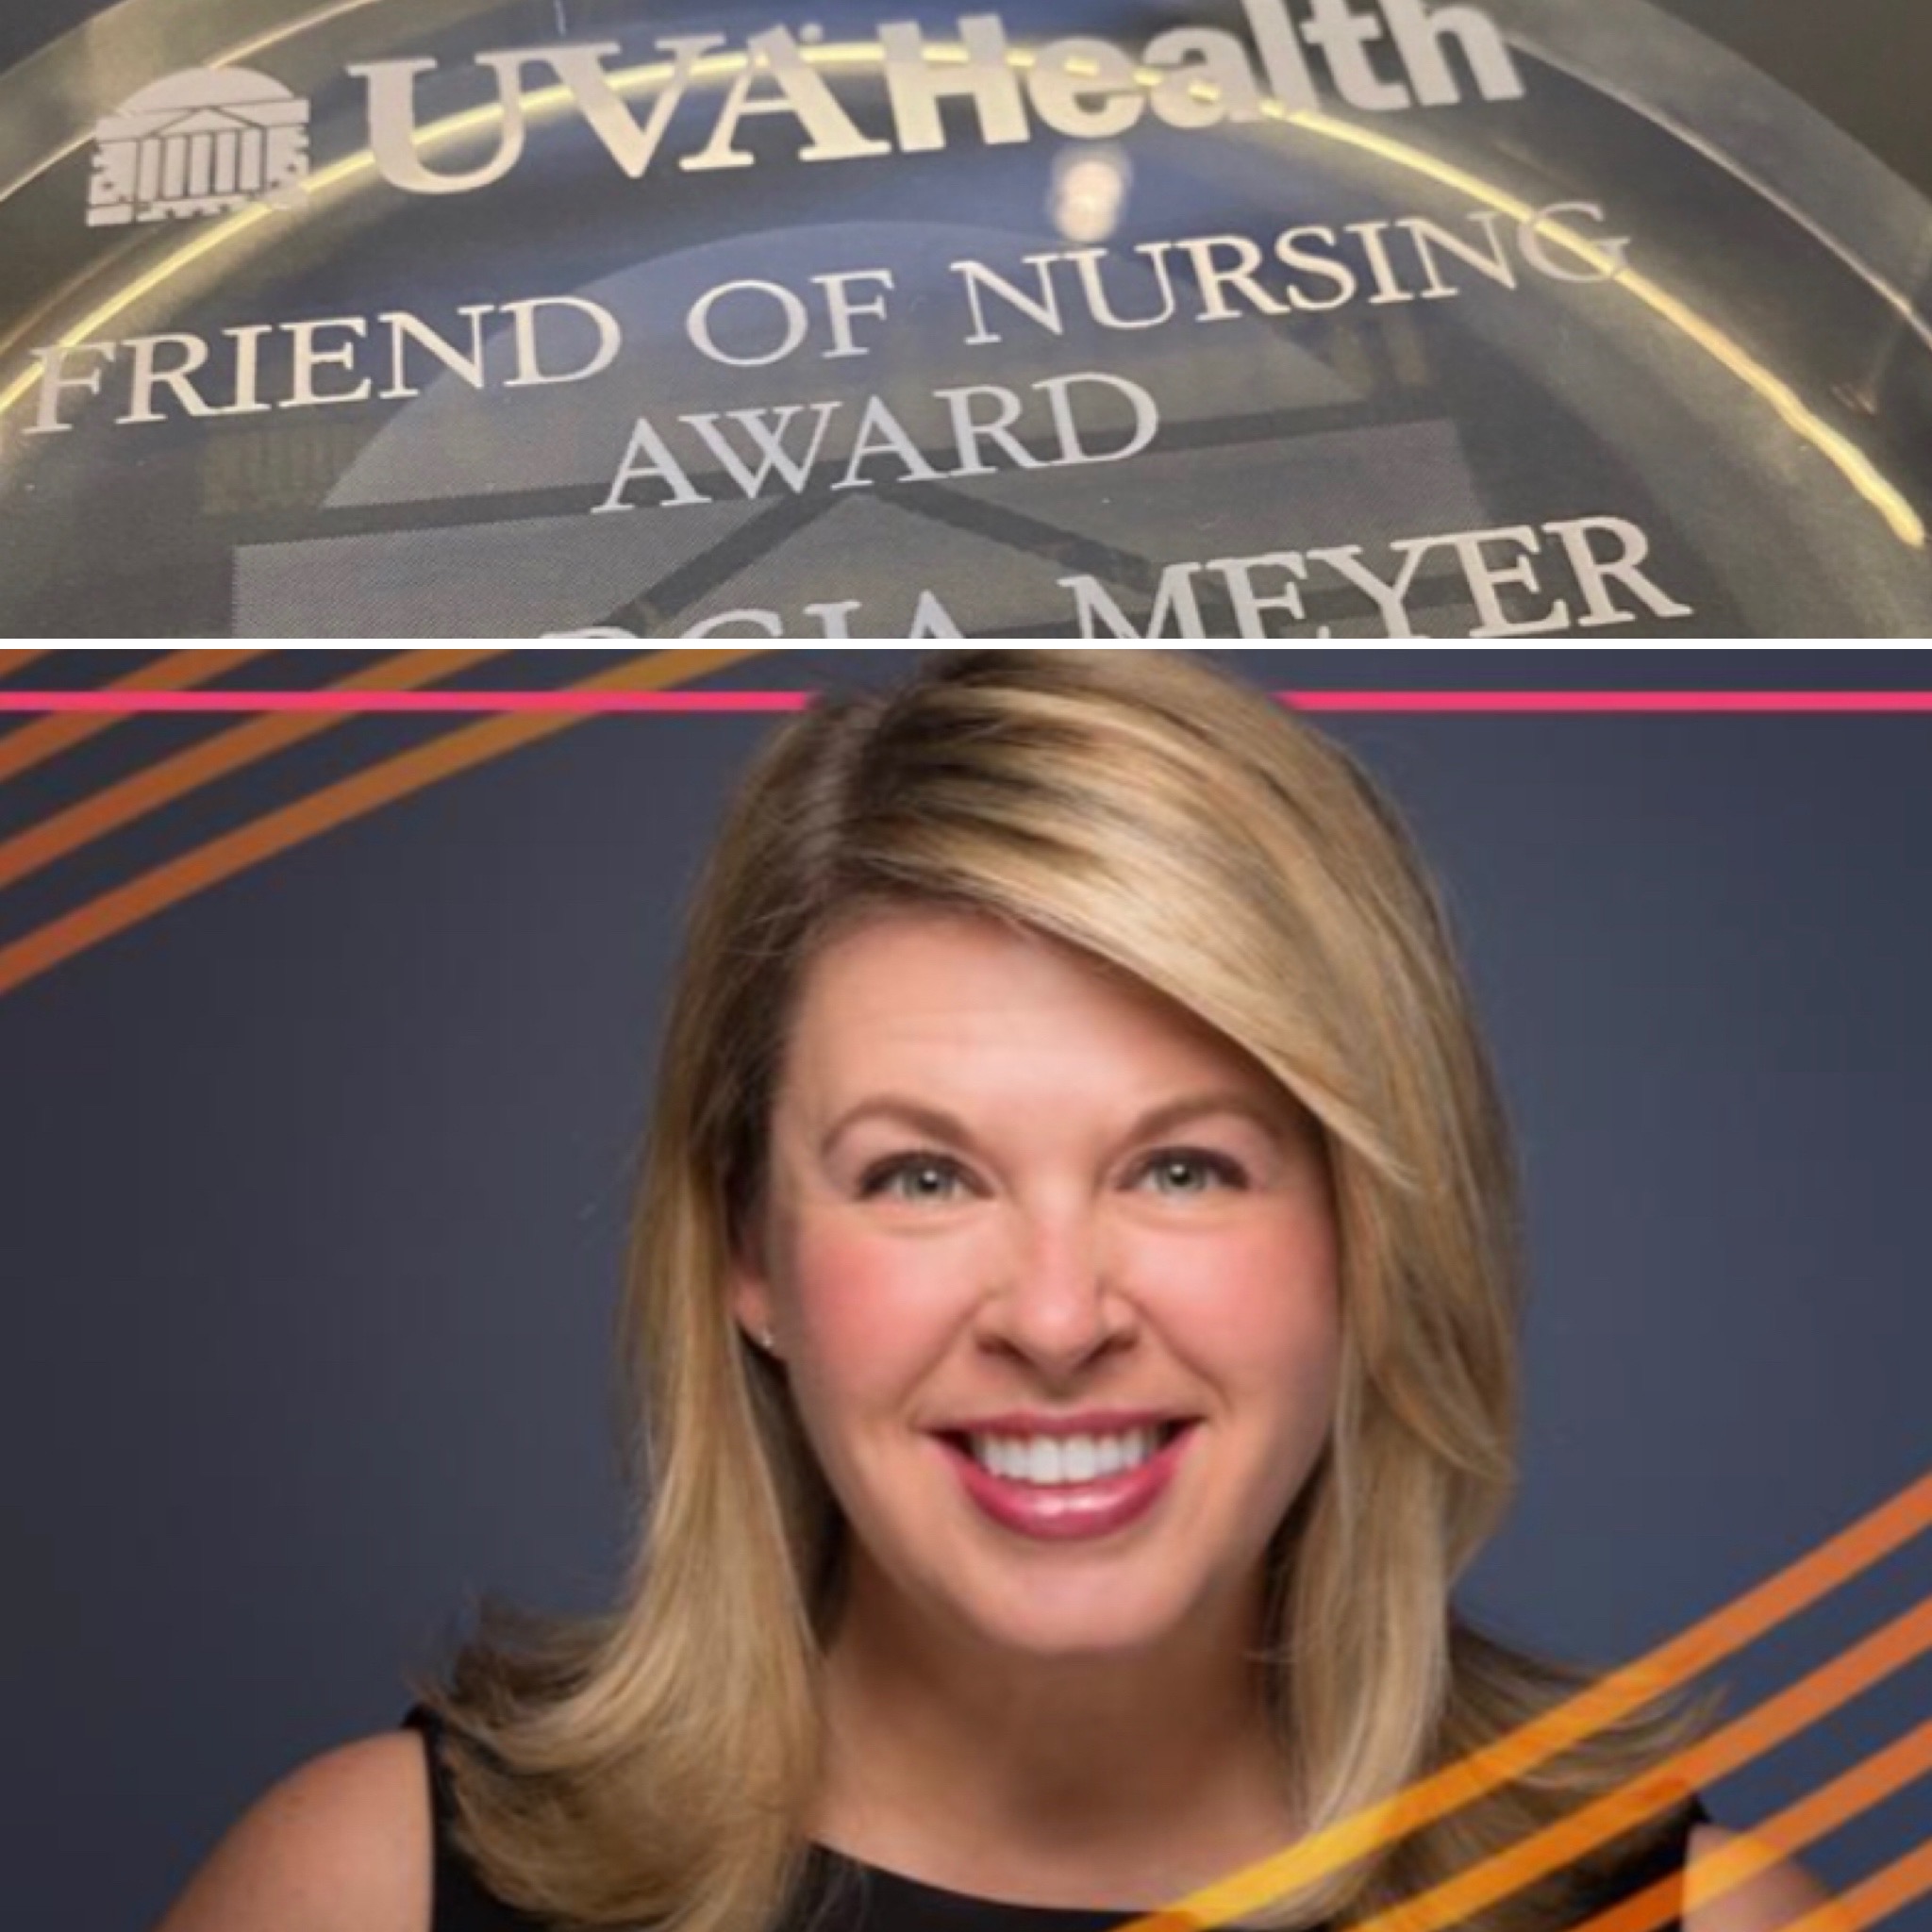 Georgia Meyer UVA Health Friend of Nursing Award